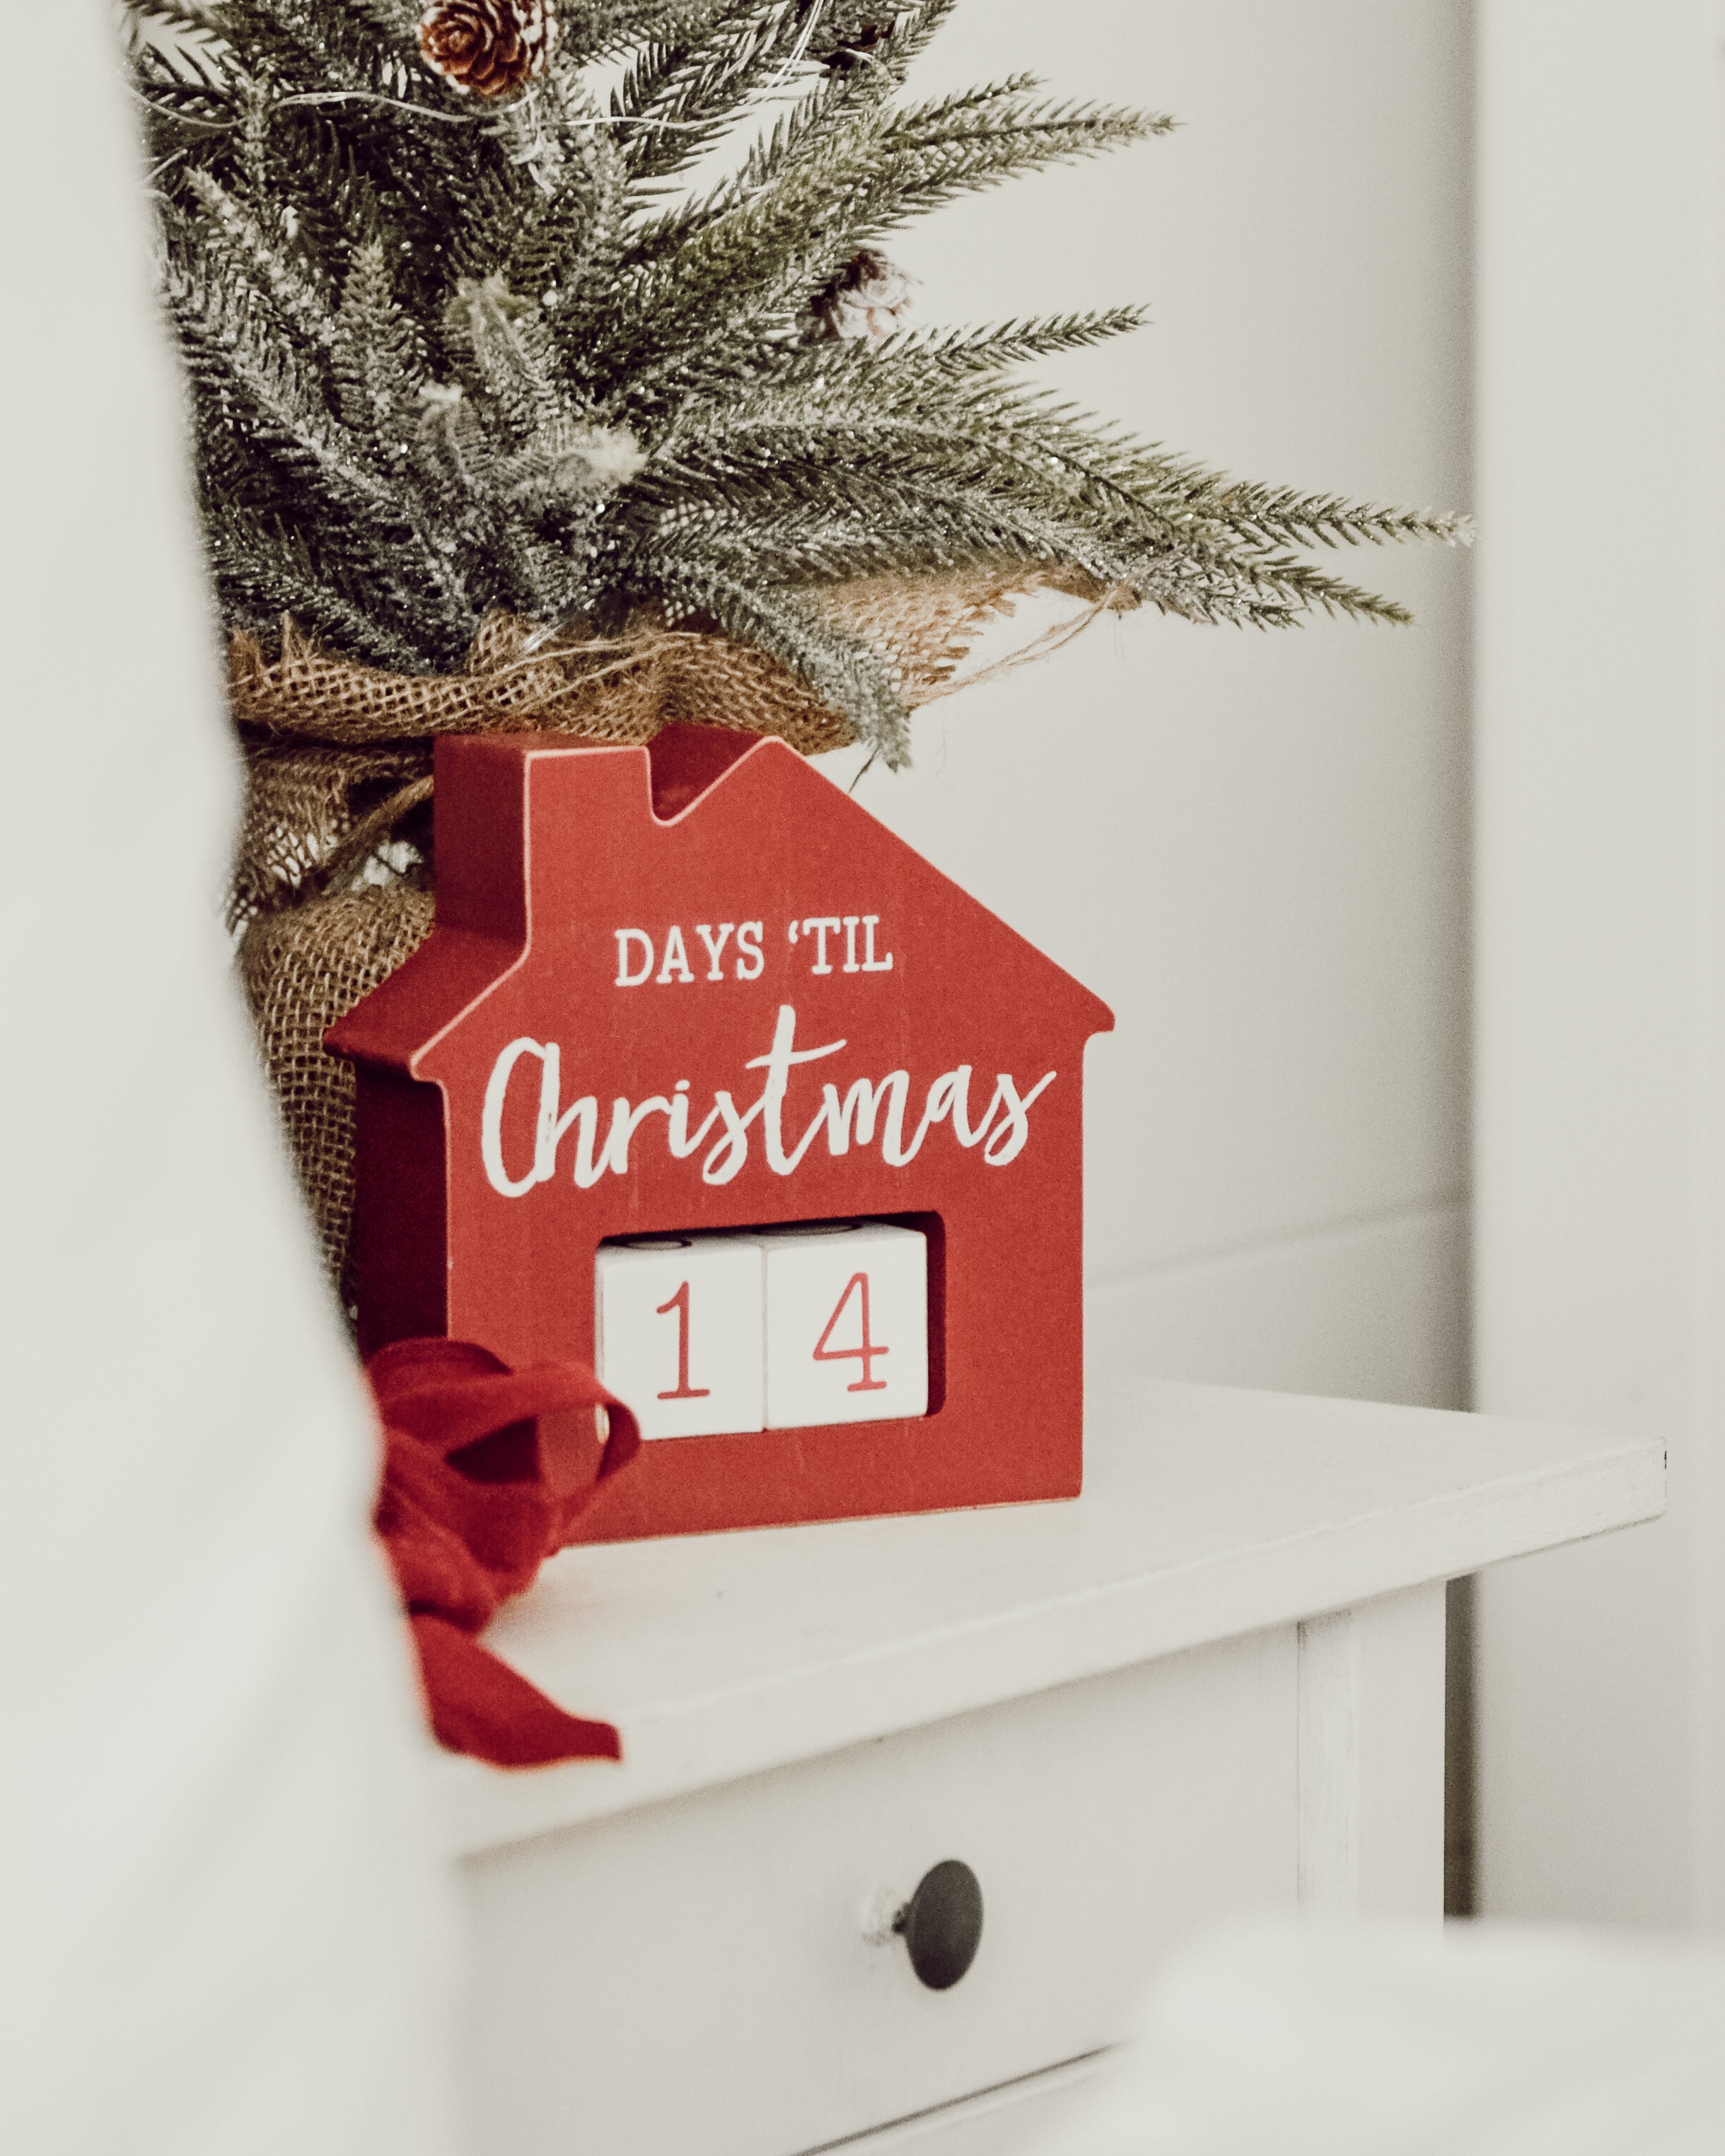 Countdown-Kalender „Days Til Christmas"